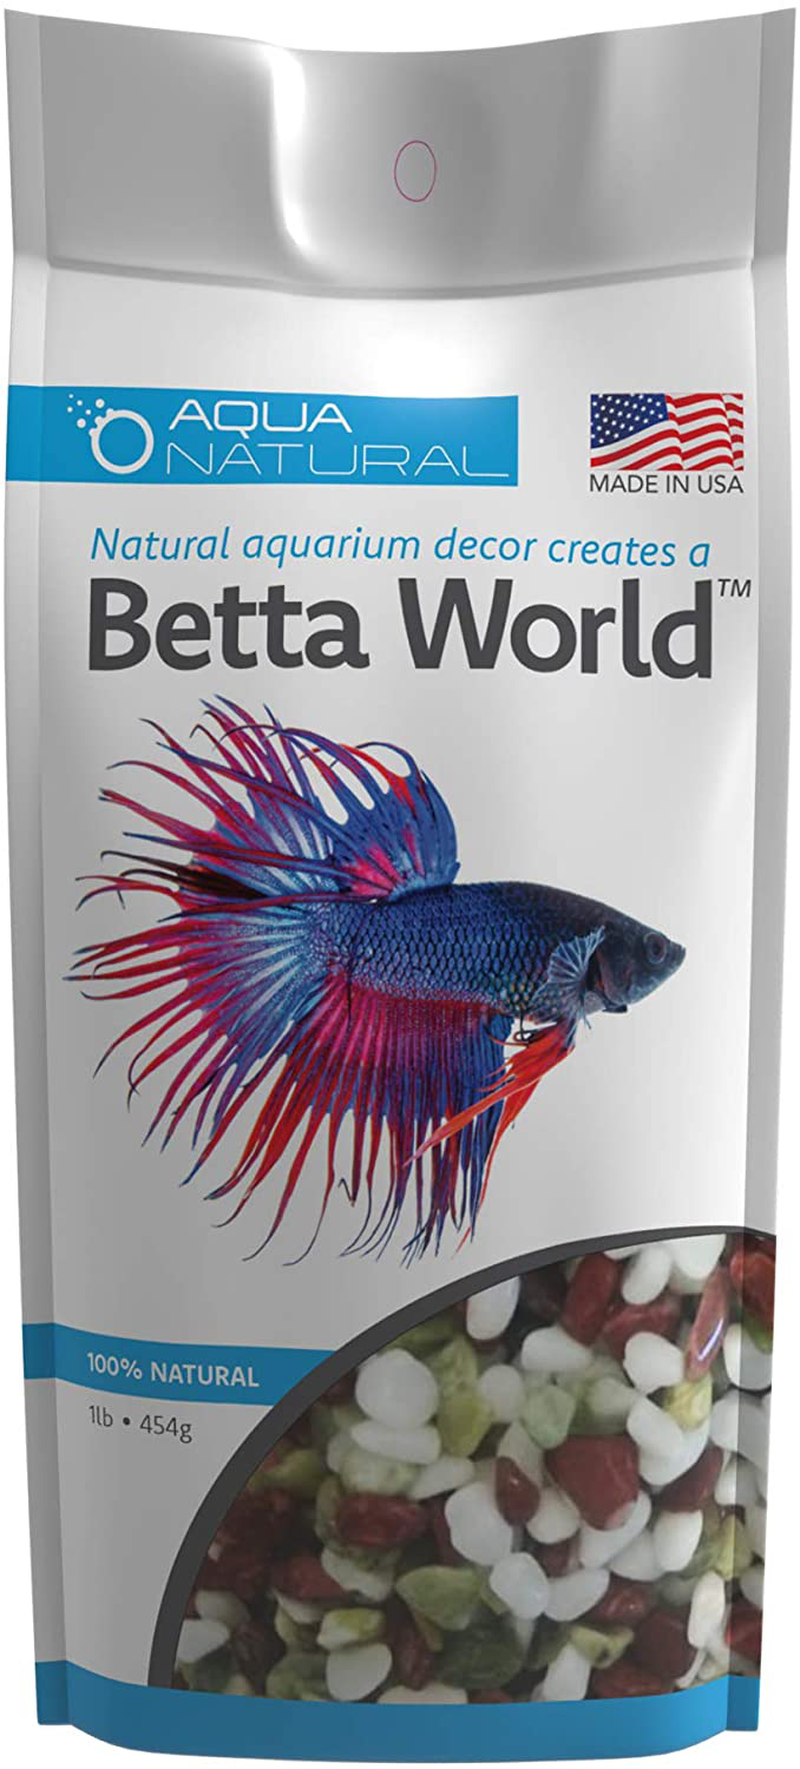 Aquanatural Betta World